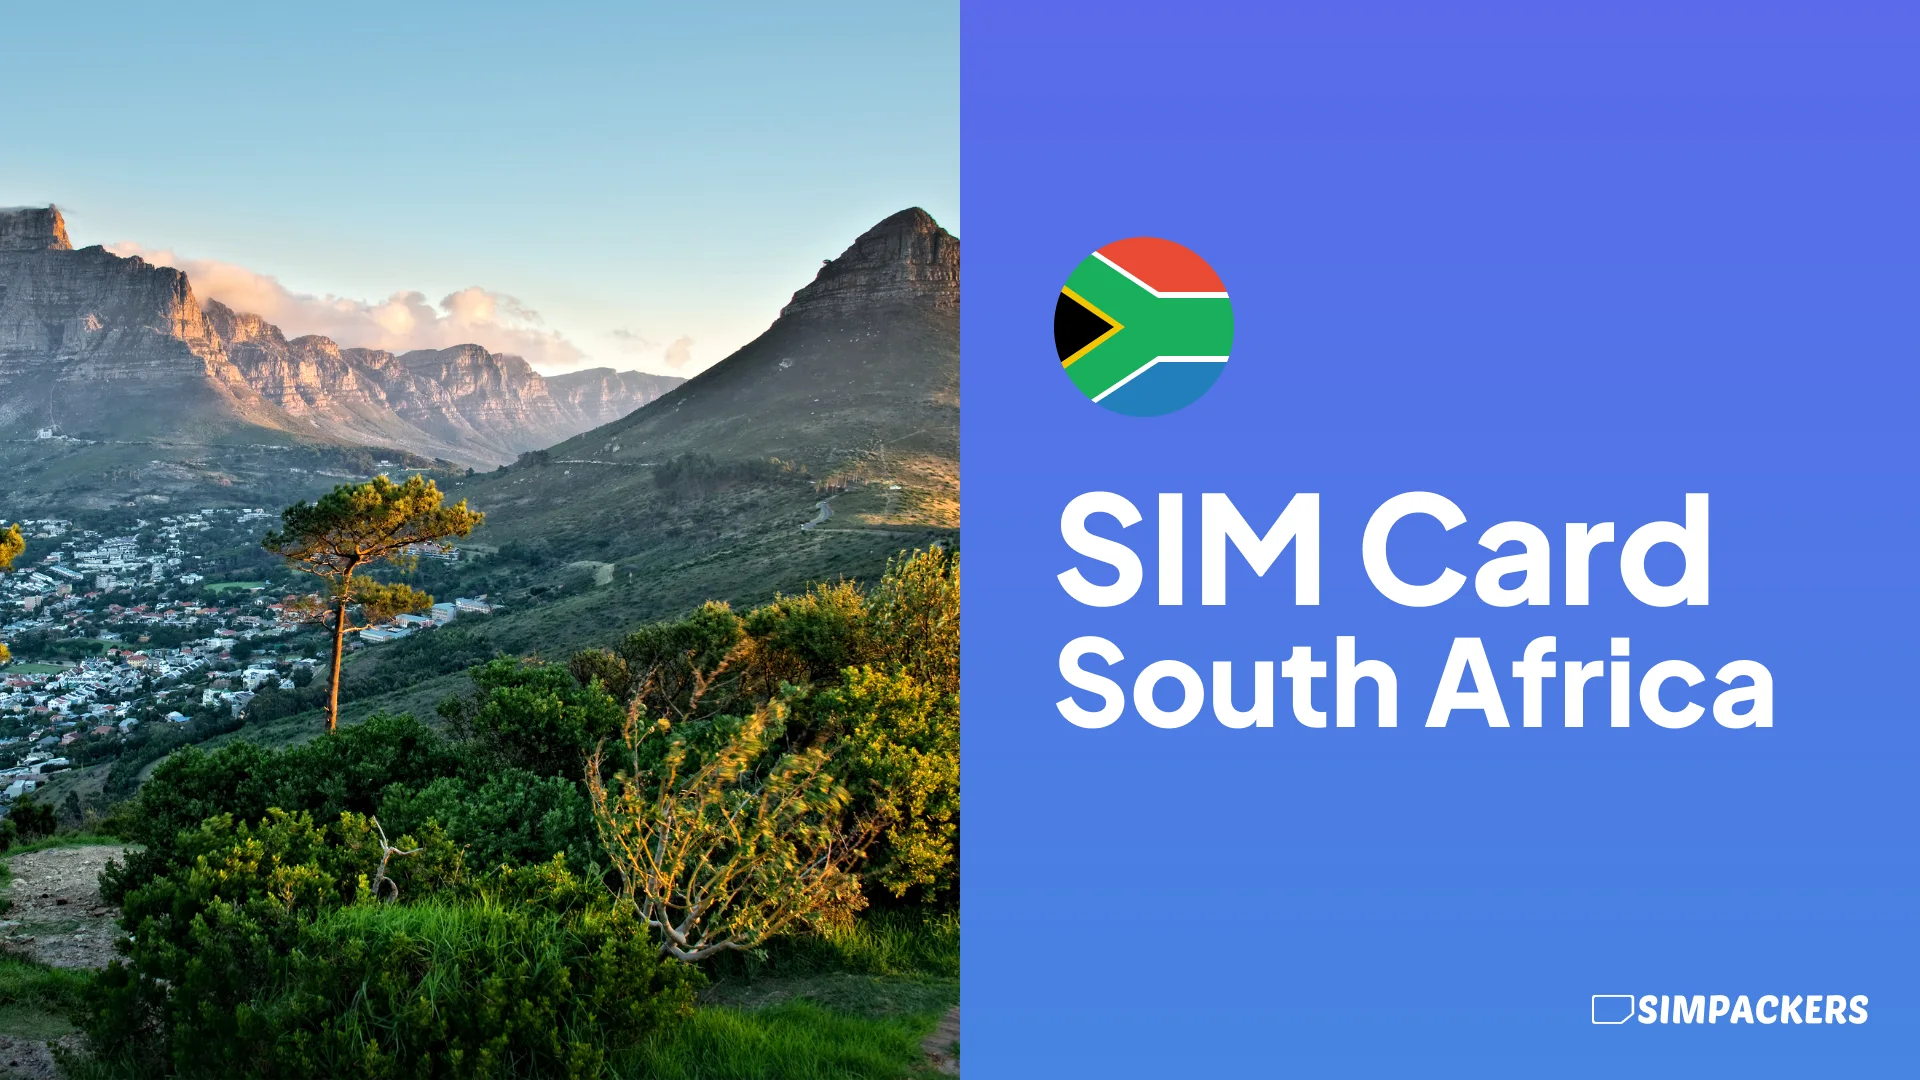 EN/FEATURED_IMAGES/sim-card-south-africa.webp